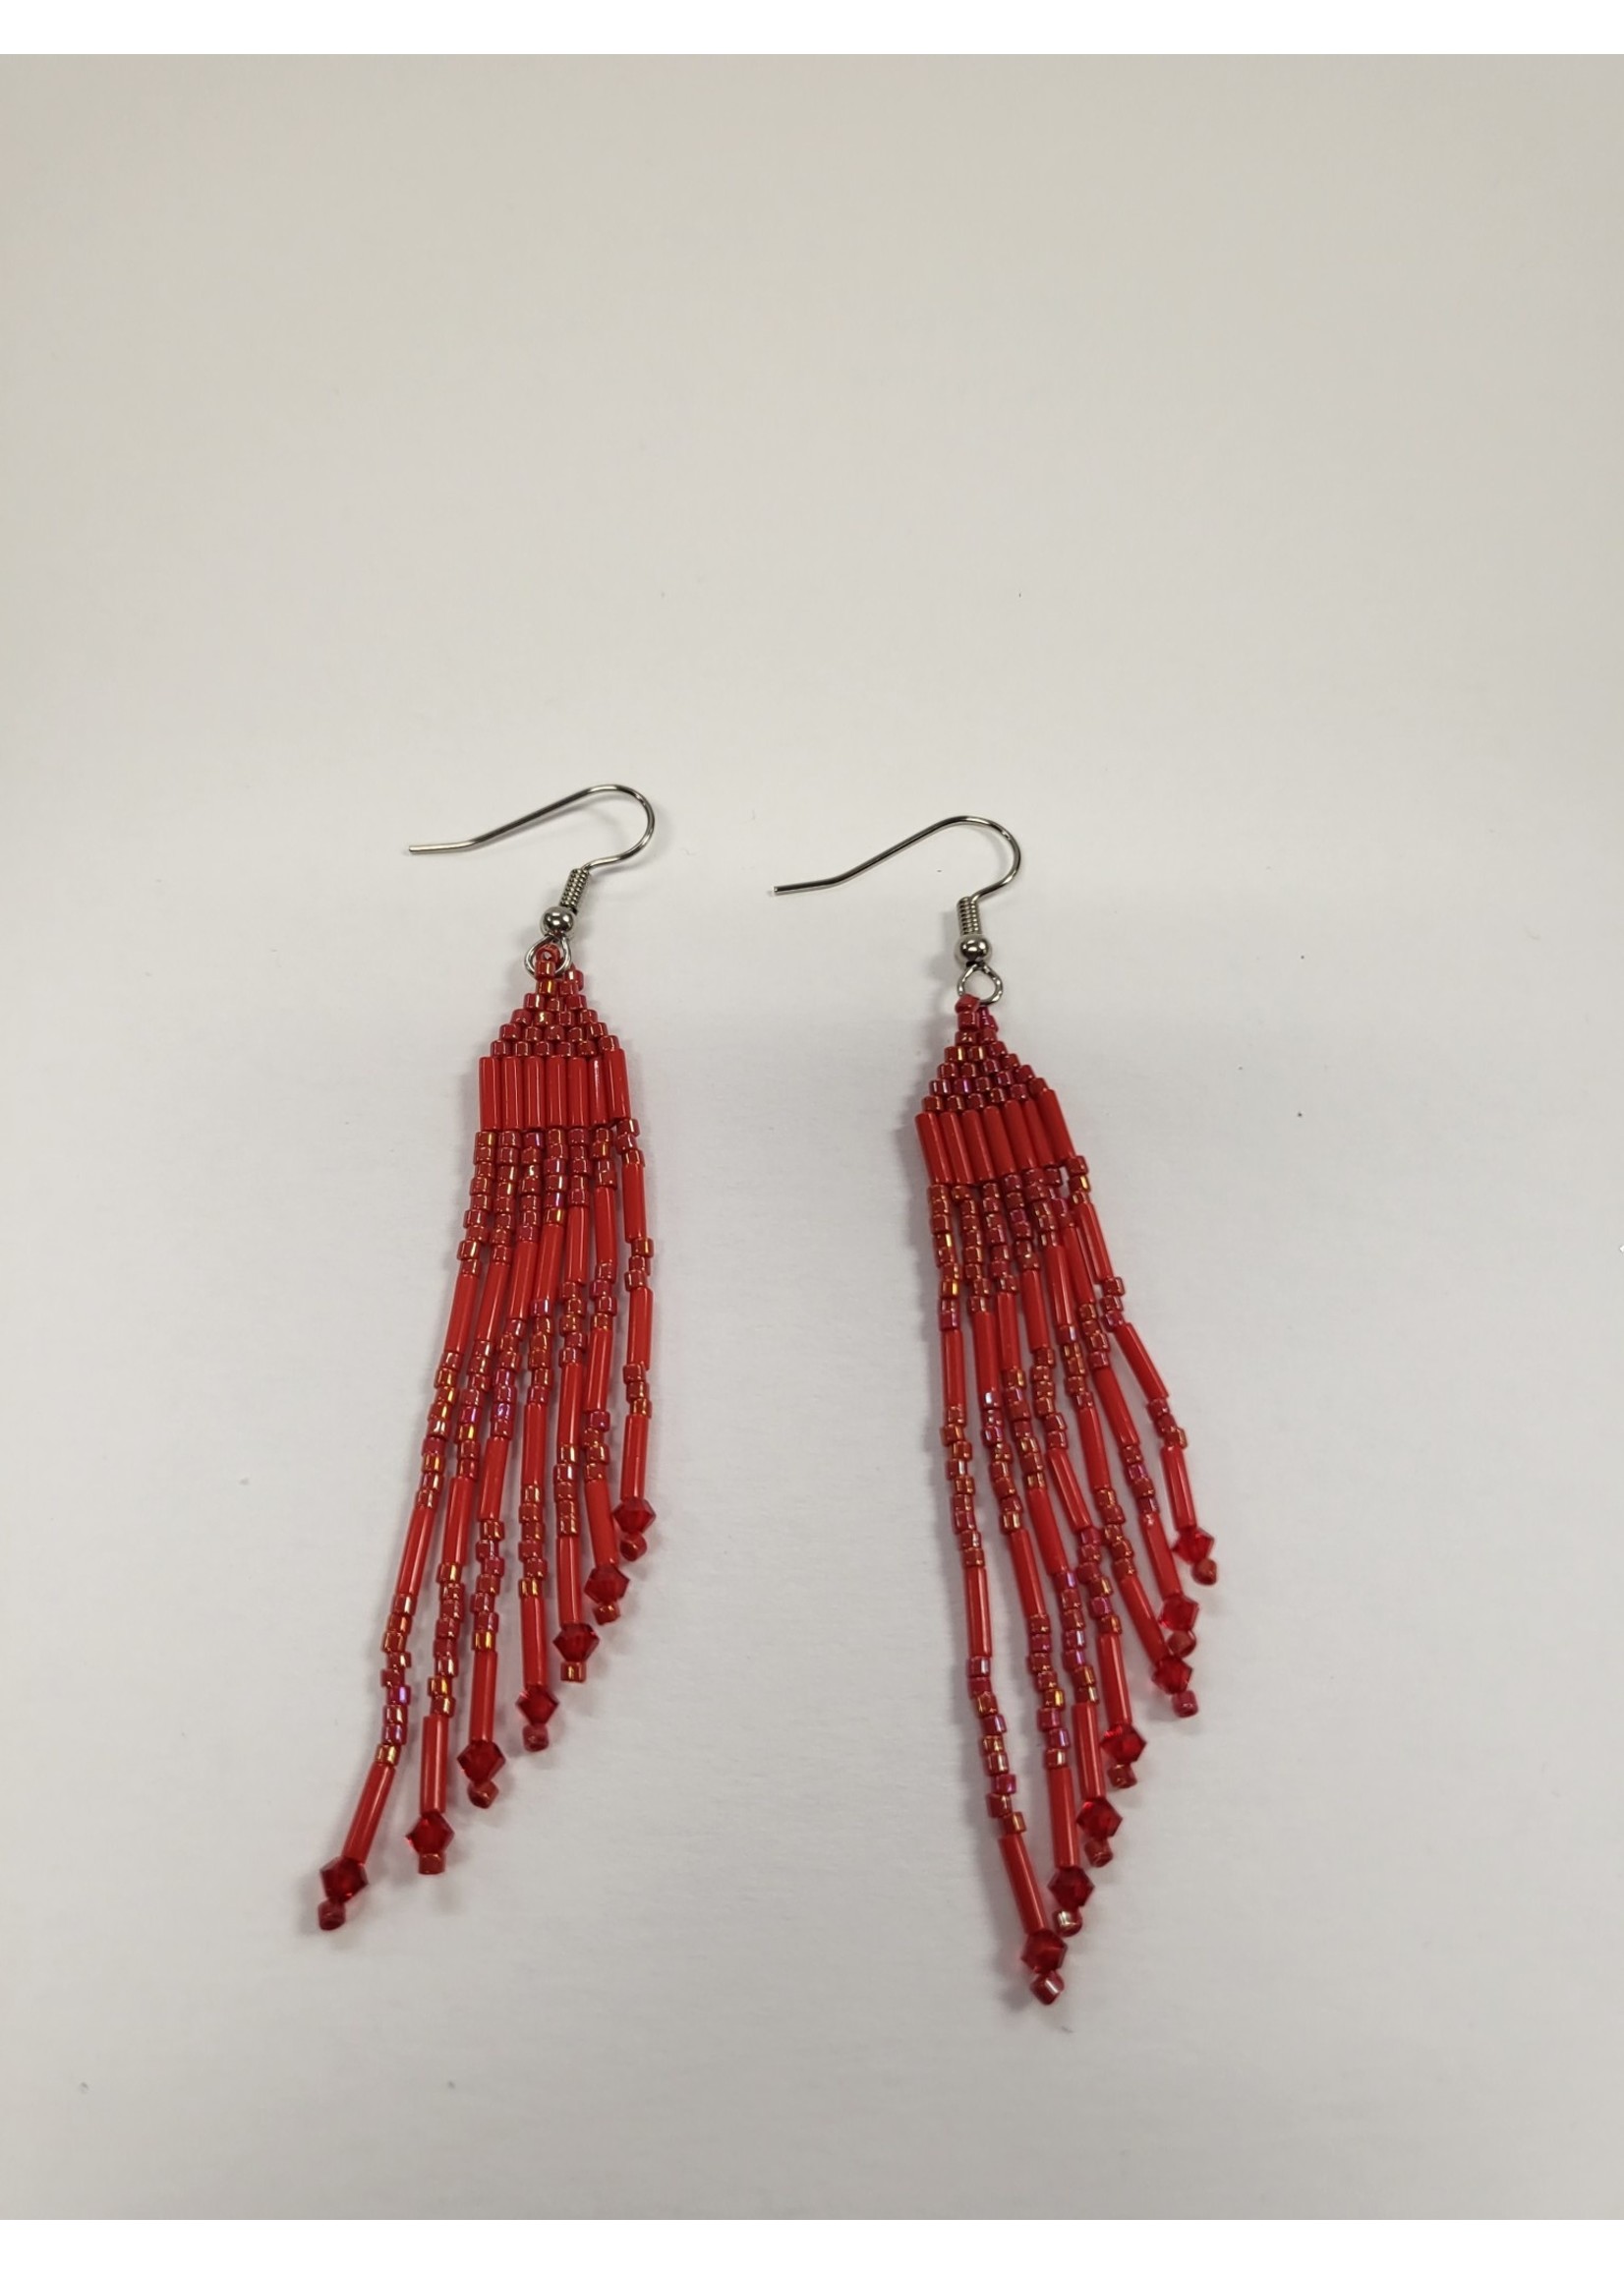 Beaded Earrings Red Tassel (SOLD)